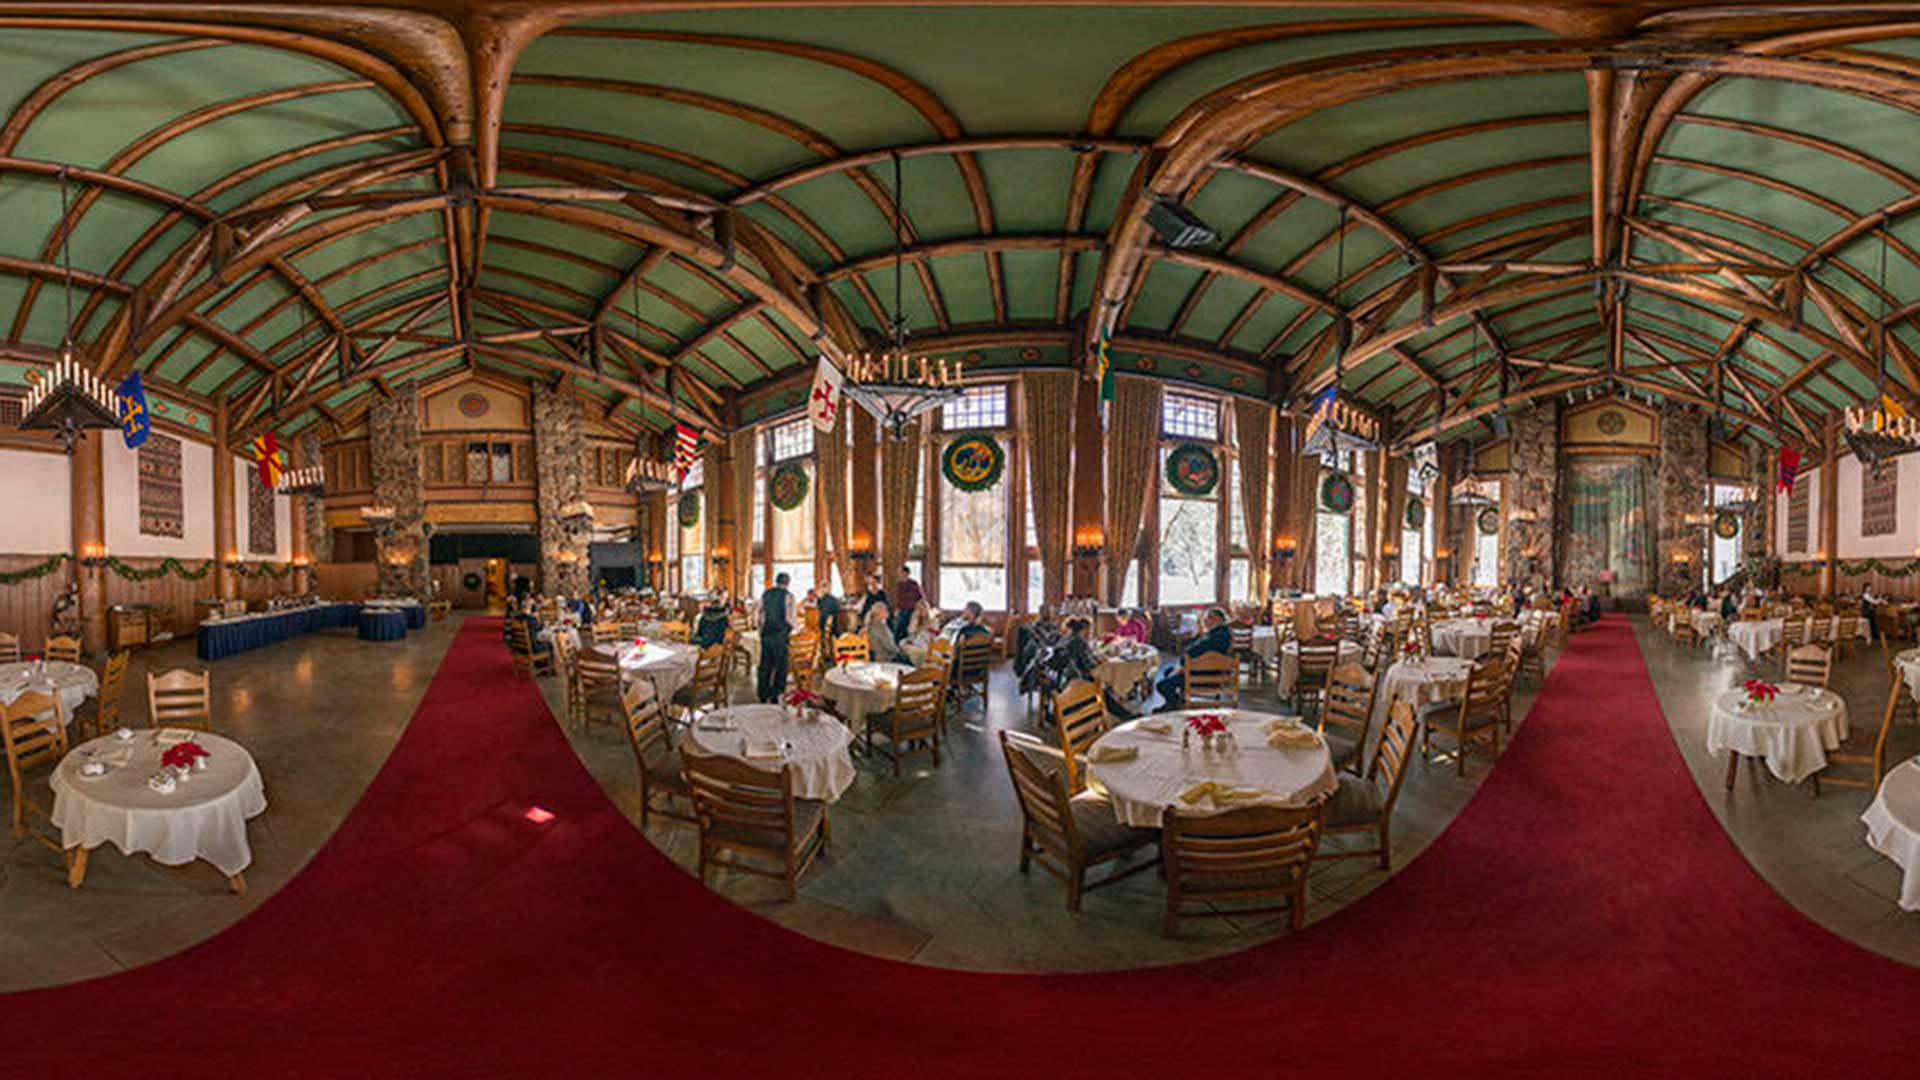 Grand Dining Room at Yosemite